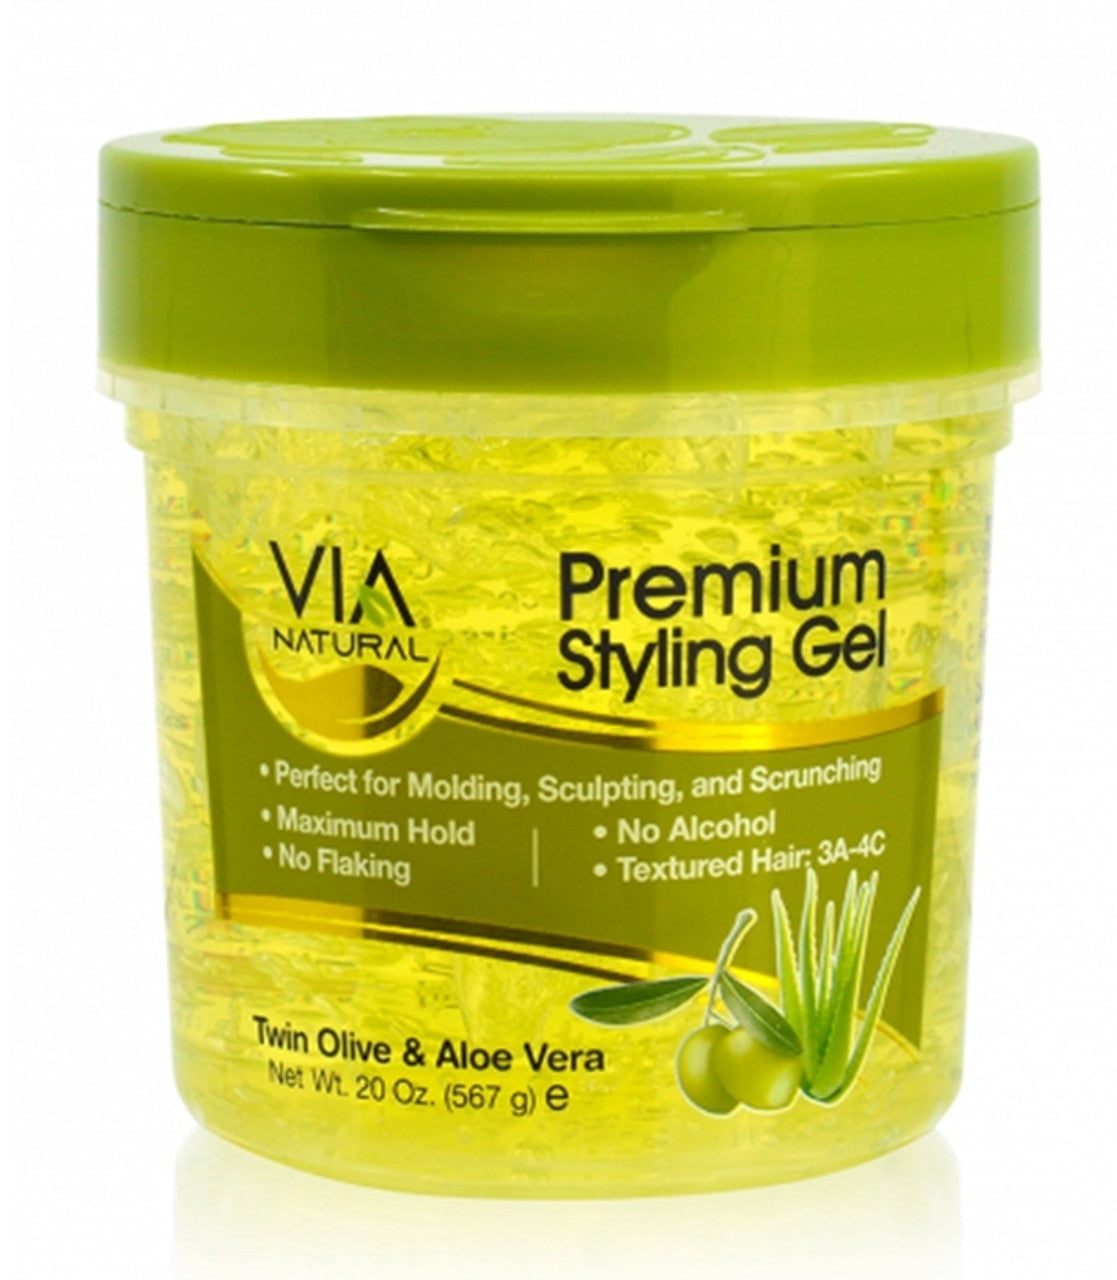 VIA NATURAL - Premium Styling Gel Twin Olive & Aloe Vera 